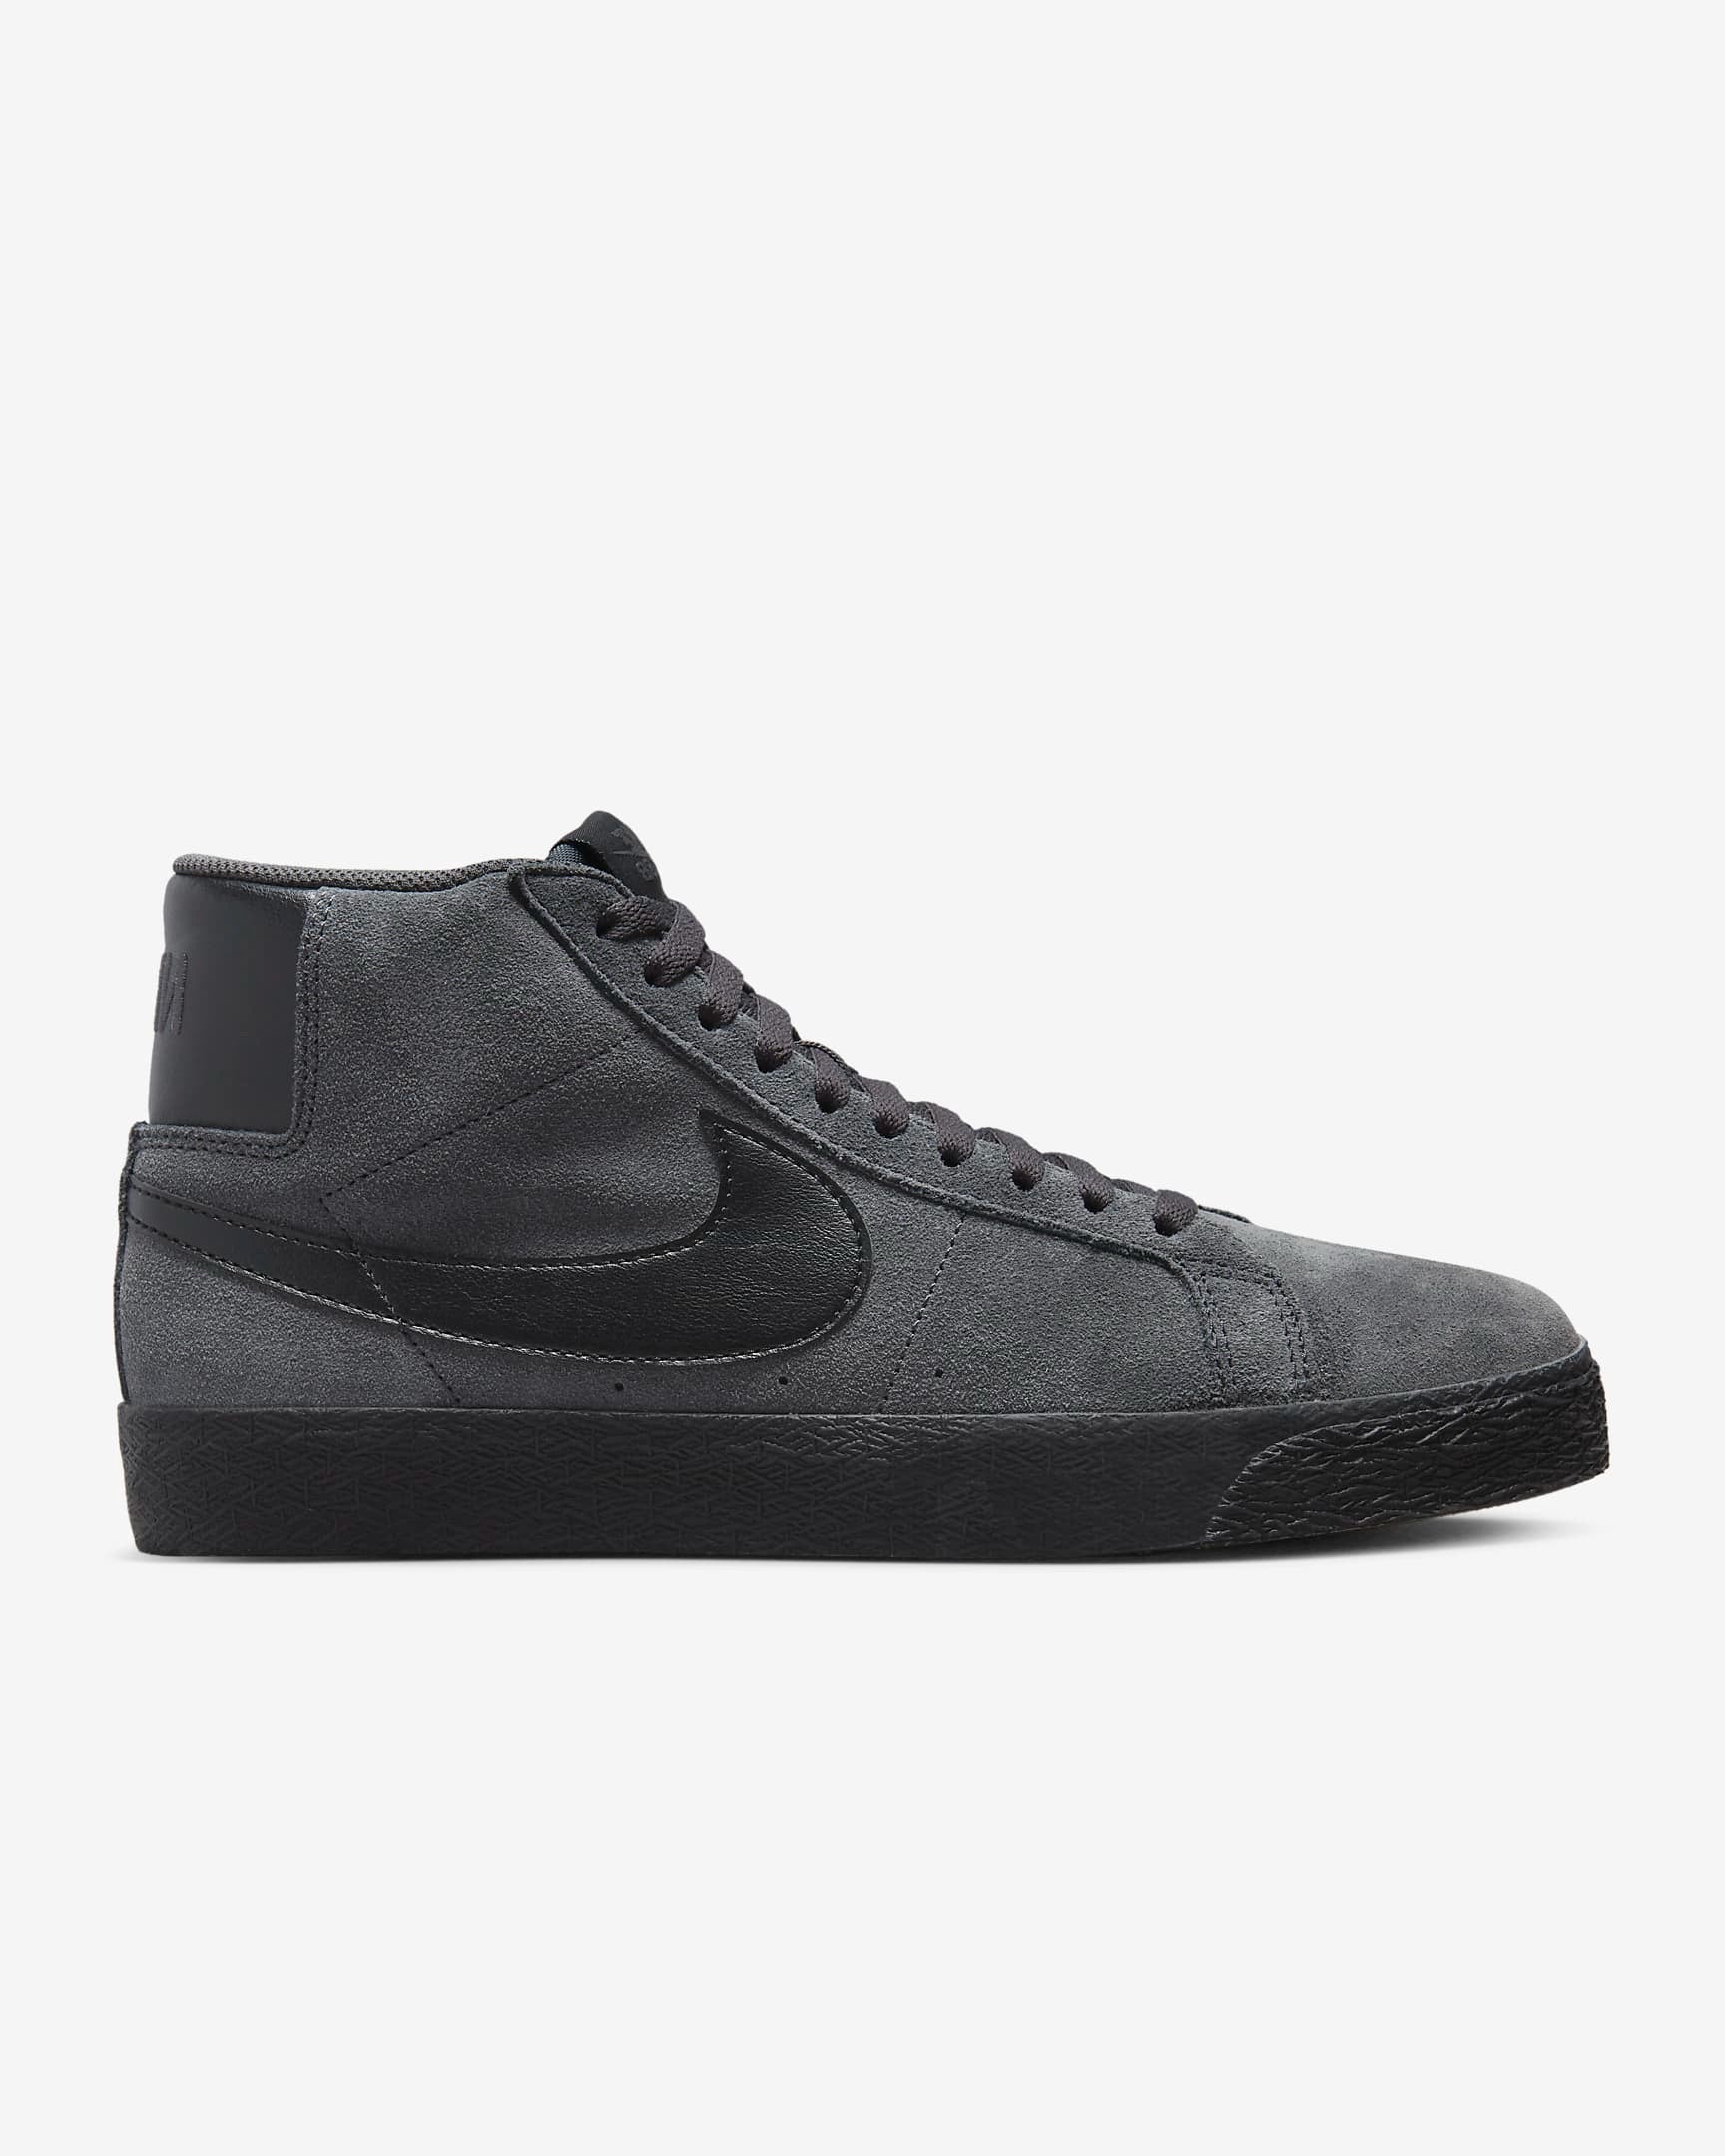 Nike SB Zoom Blazer Mid Shoe - Anthracite/Anthracite/Black/Black